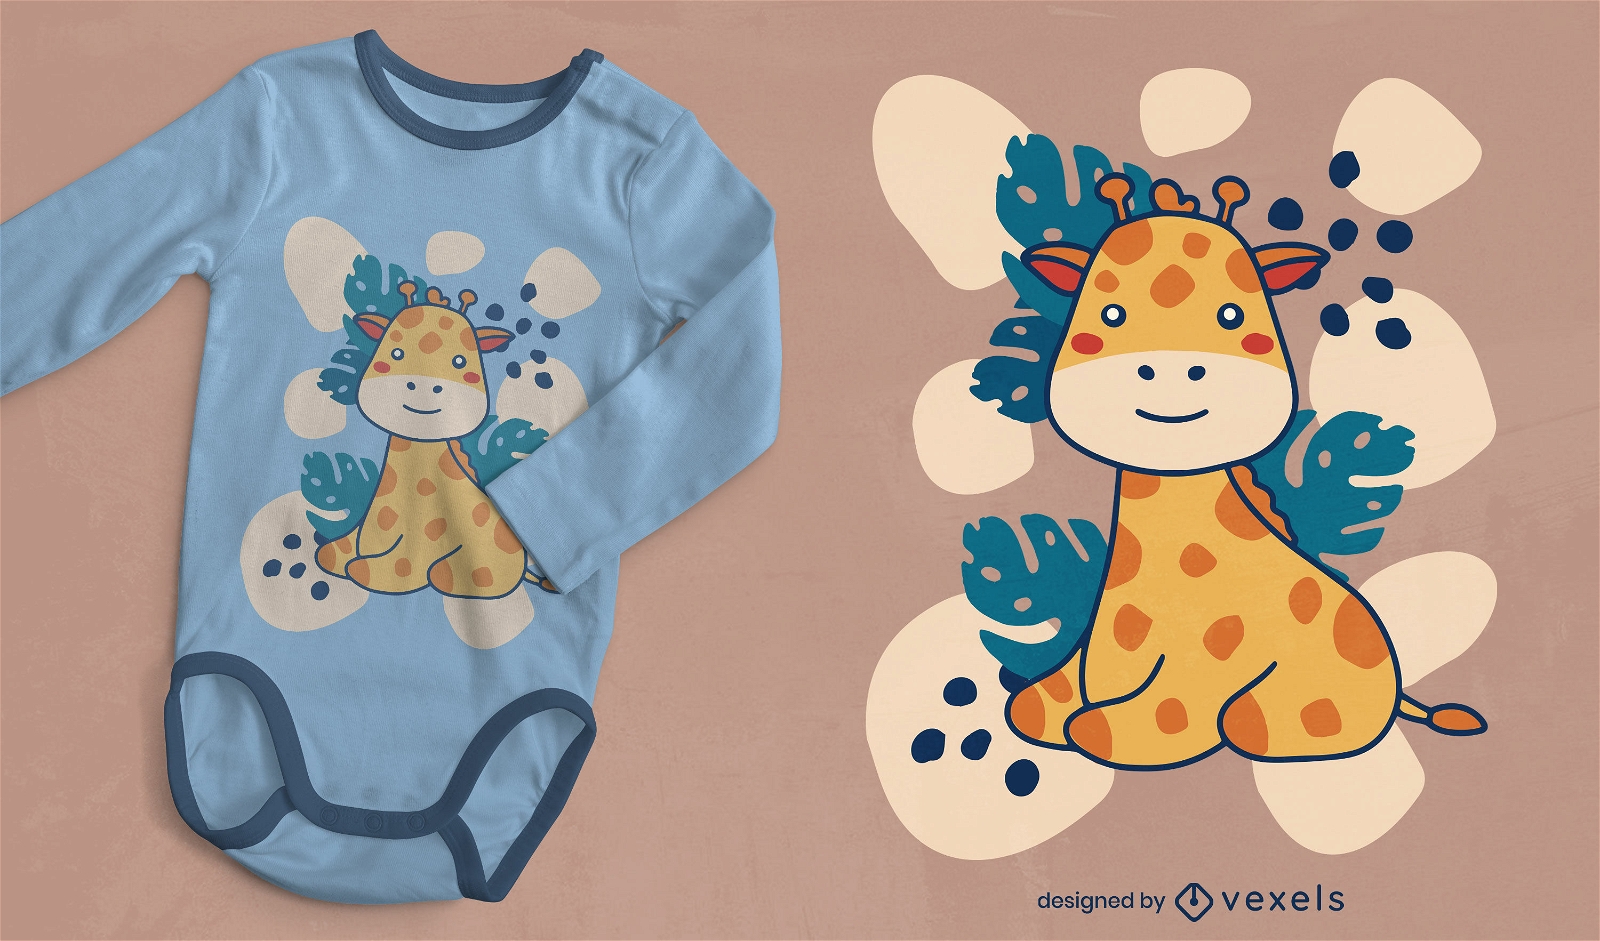 Projeto de camisetas de girafa e folhas para beb?s